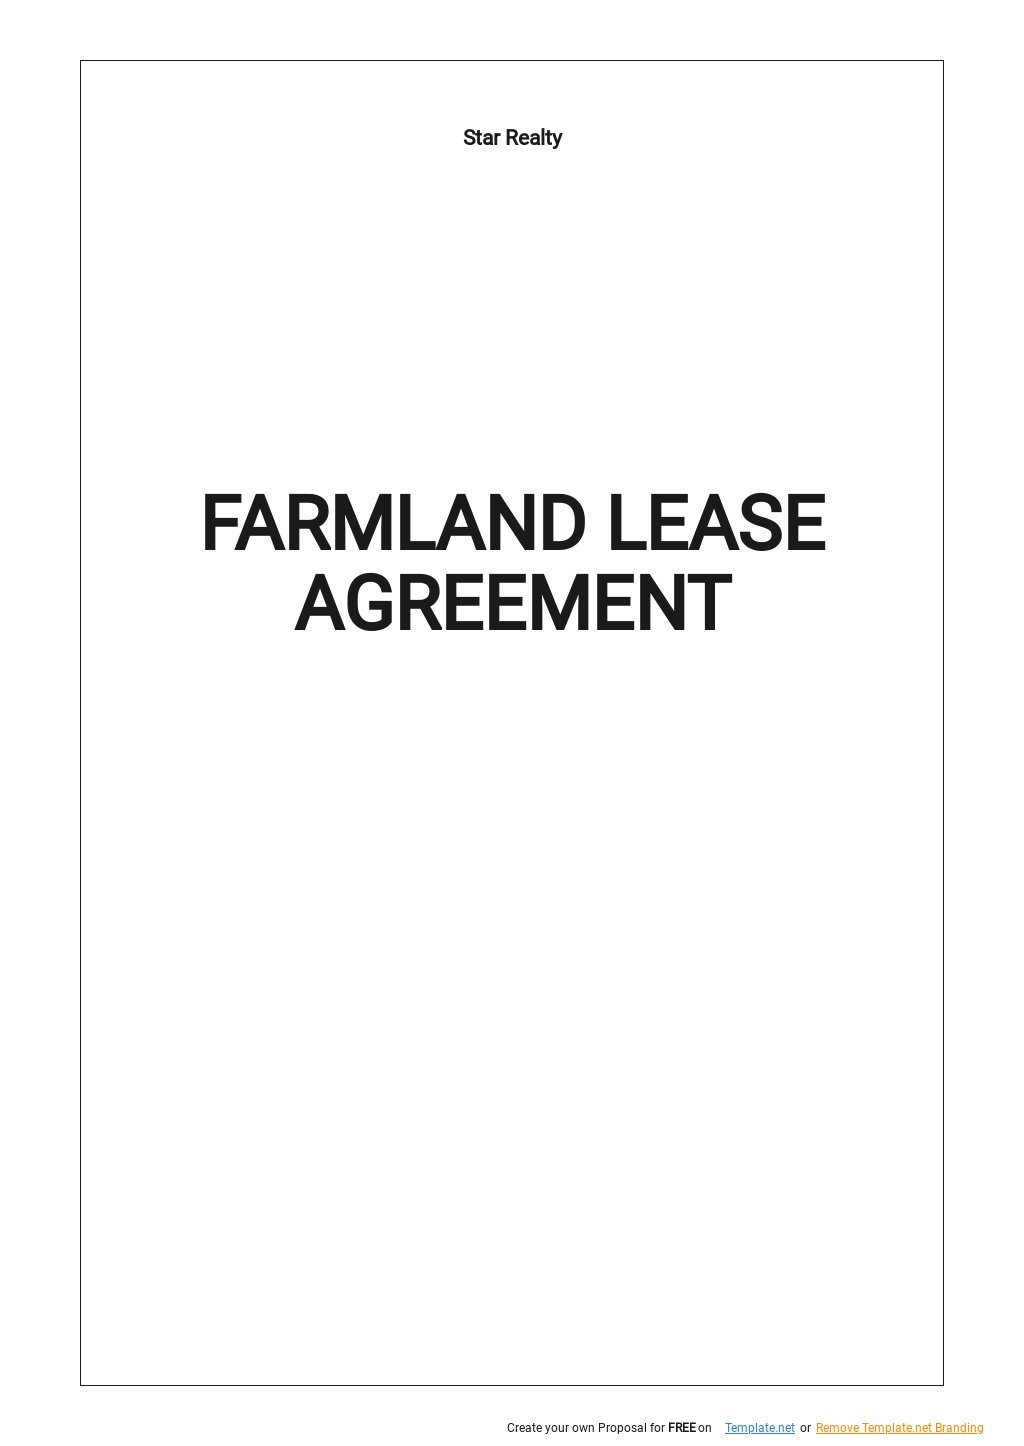 Farm Land Lease Agreement Template.jpe